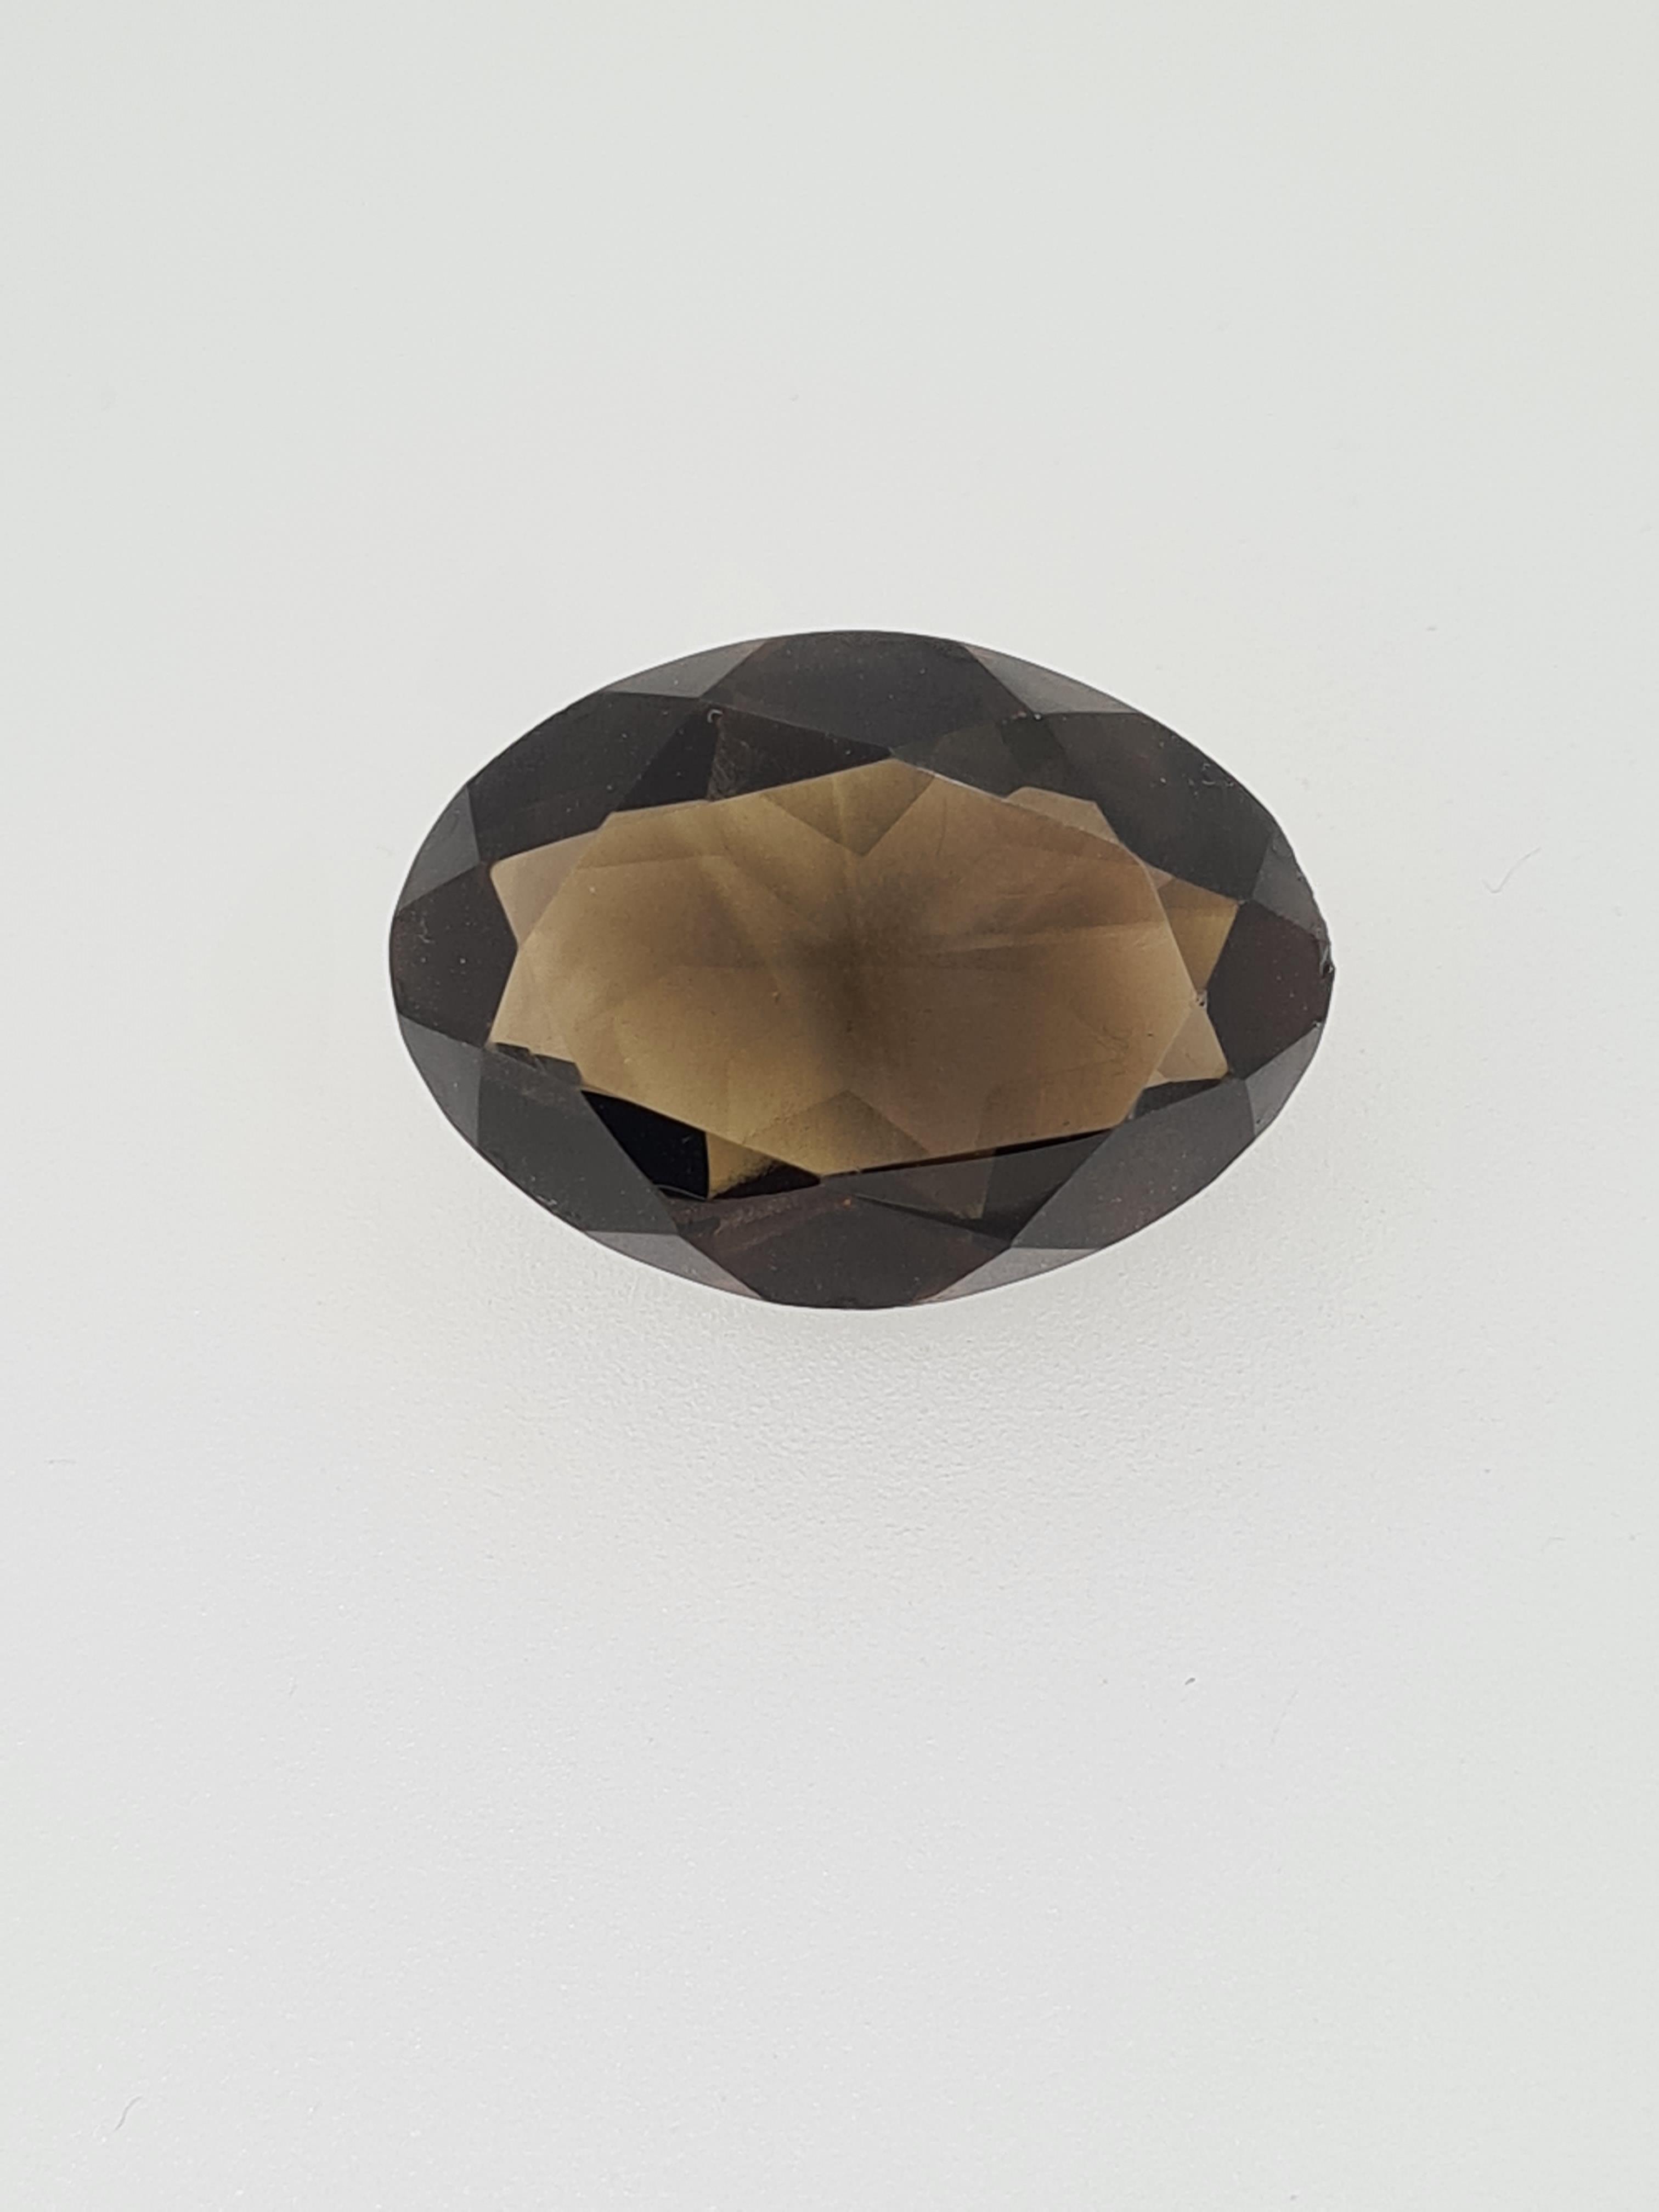 Smokey quartz oval cut gem stone - Image 3 of 4